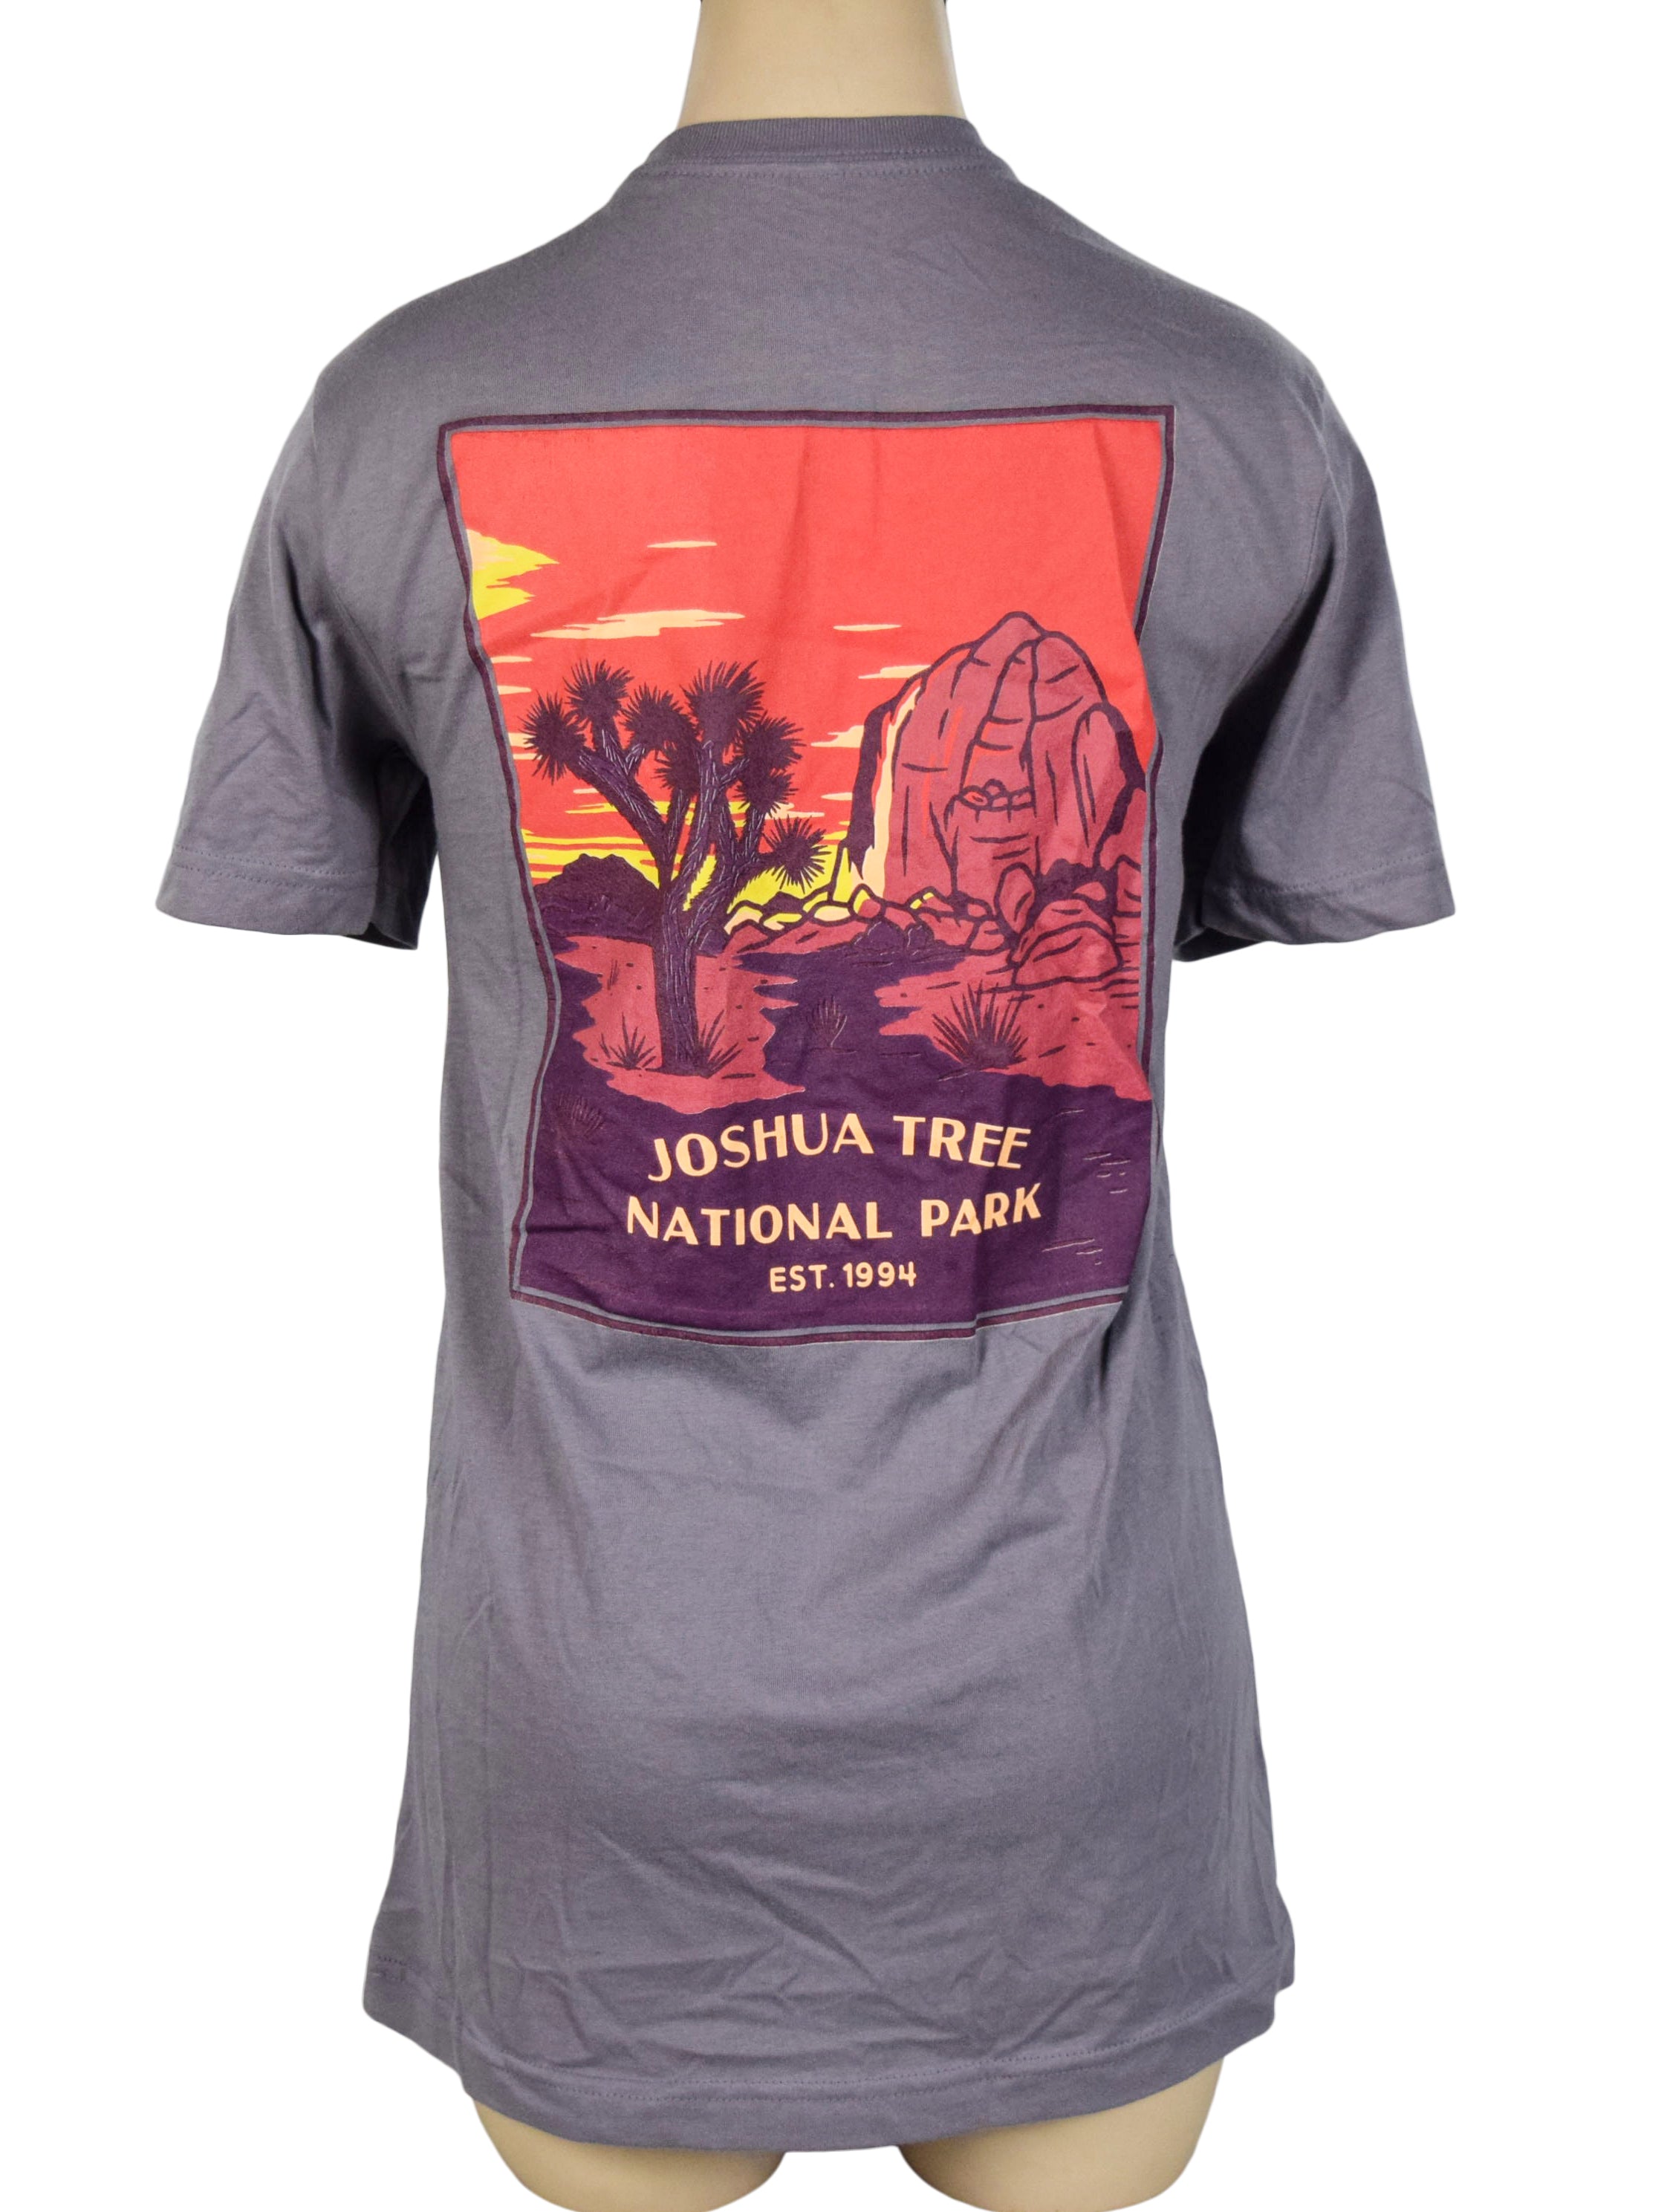 Sendero Provisions Co. Joshua Tree National Park "Storm" T-Shirt (L)